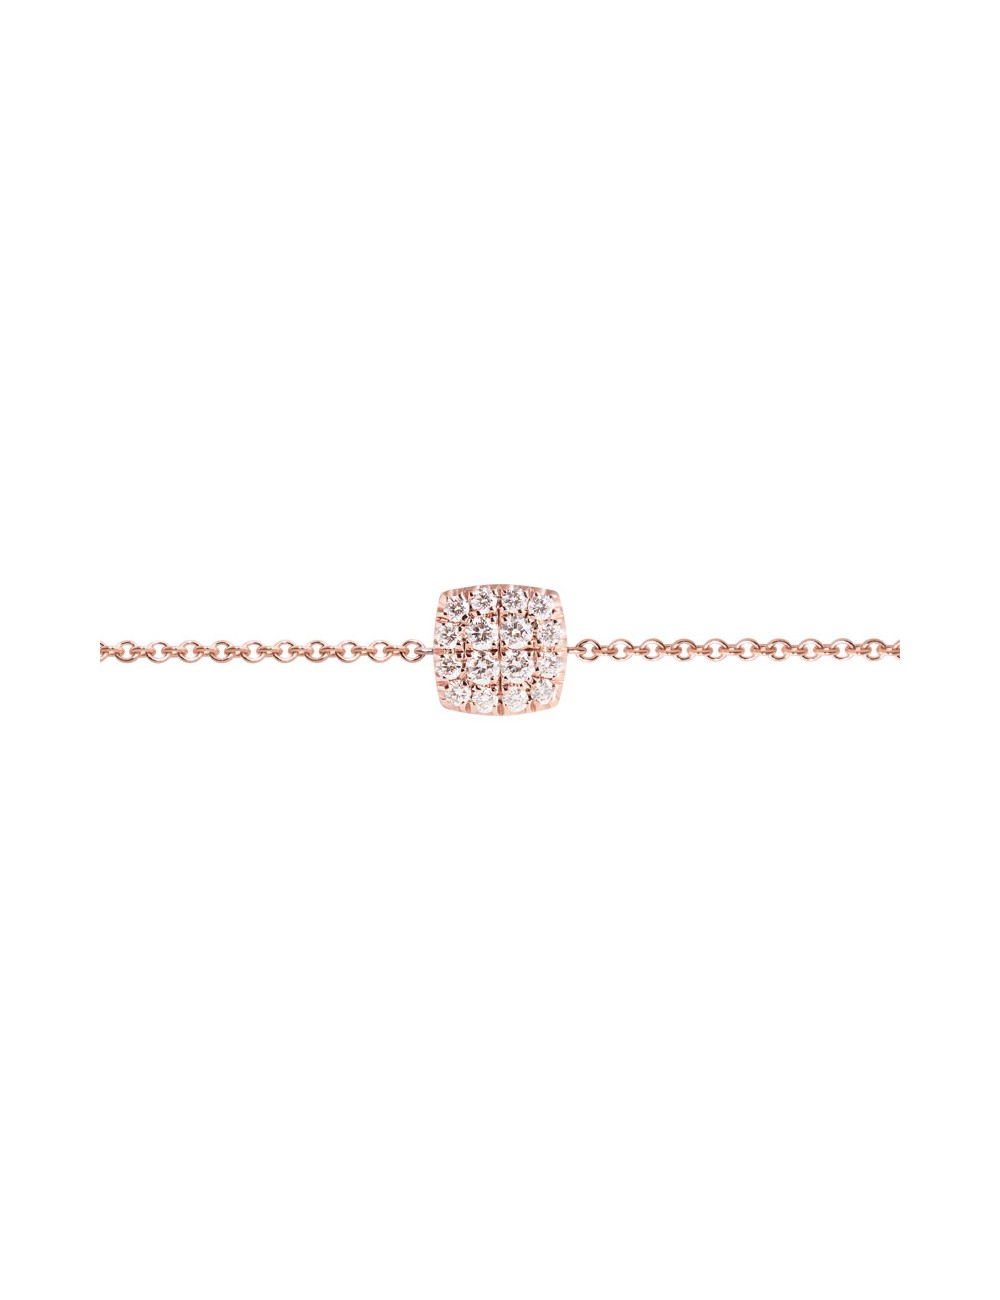 Sardà -Pulsera Oro rosa con diamantes forma cuadrada -FB2595R001